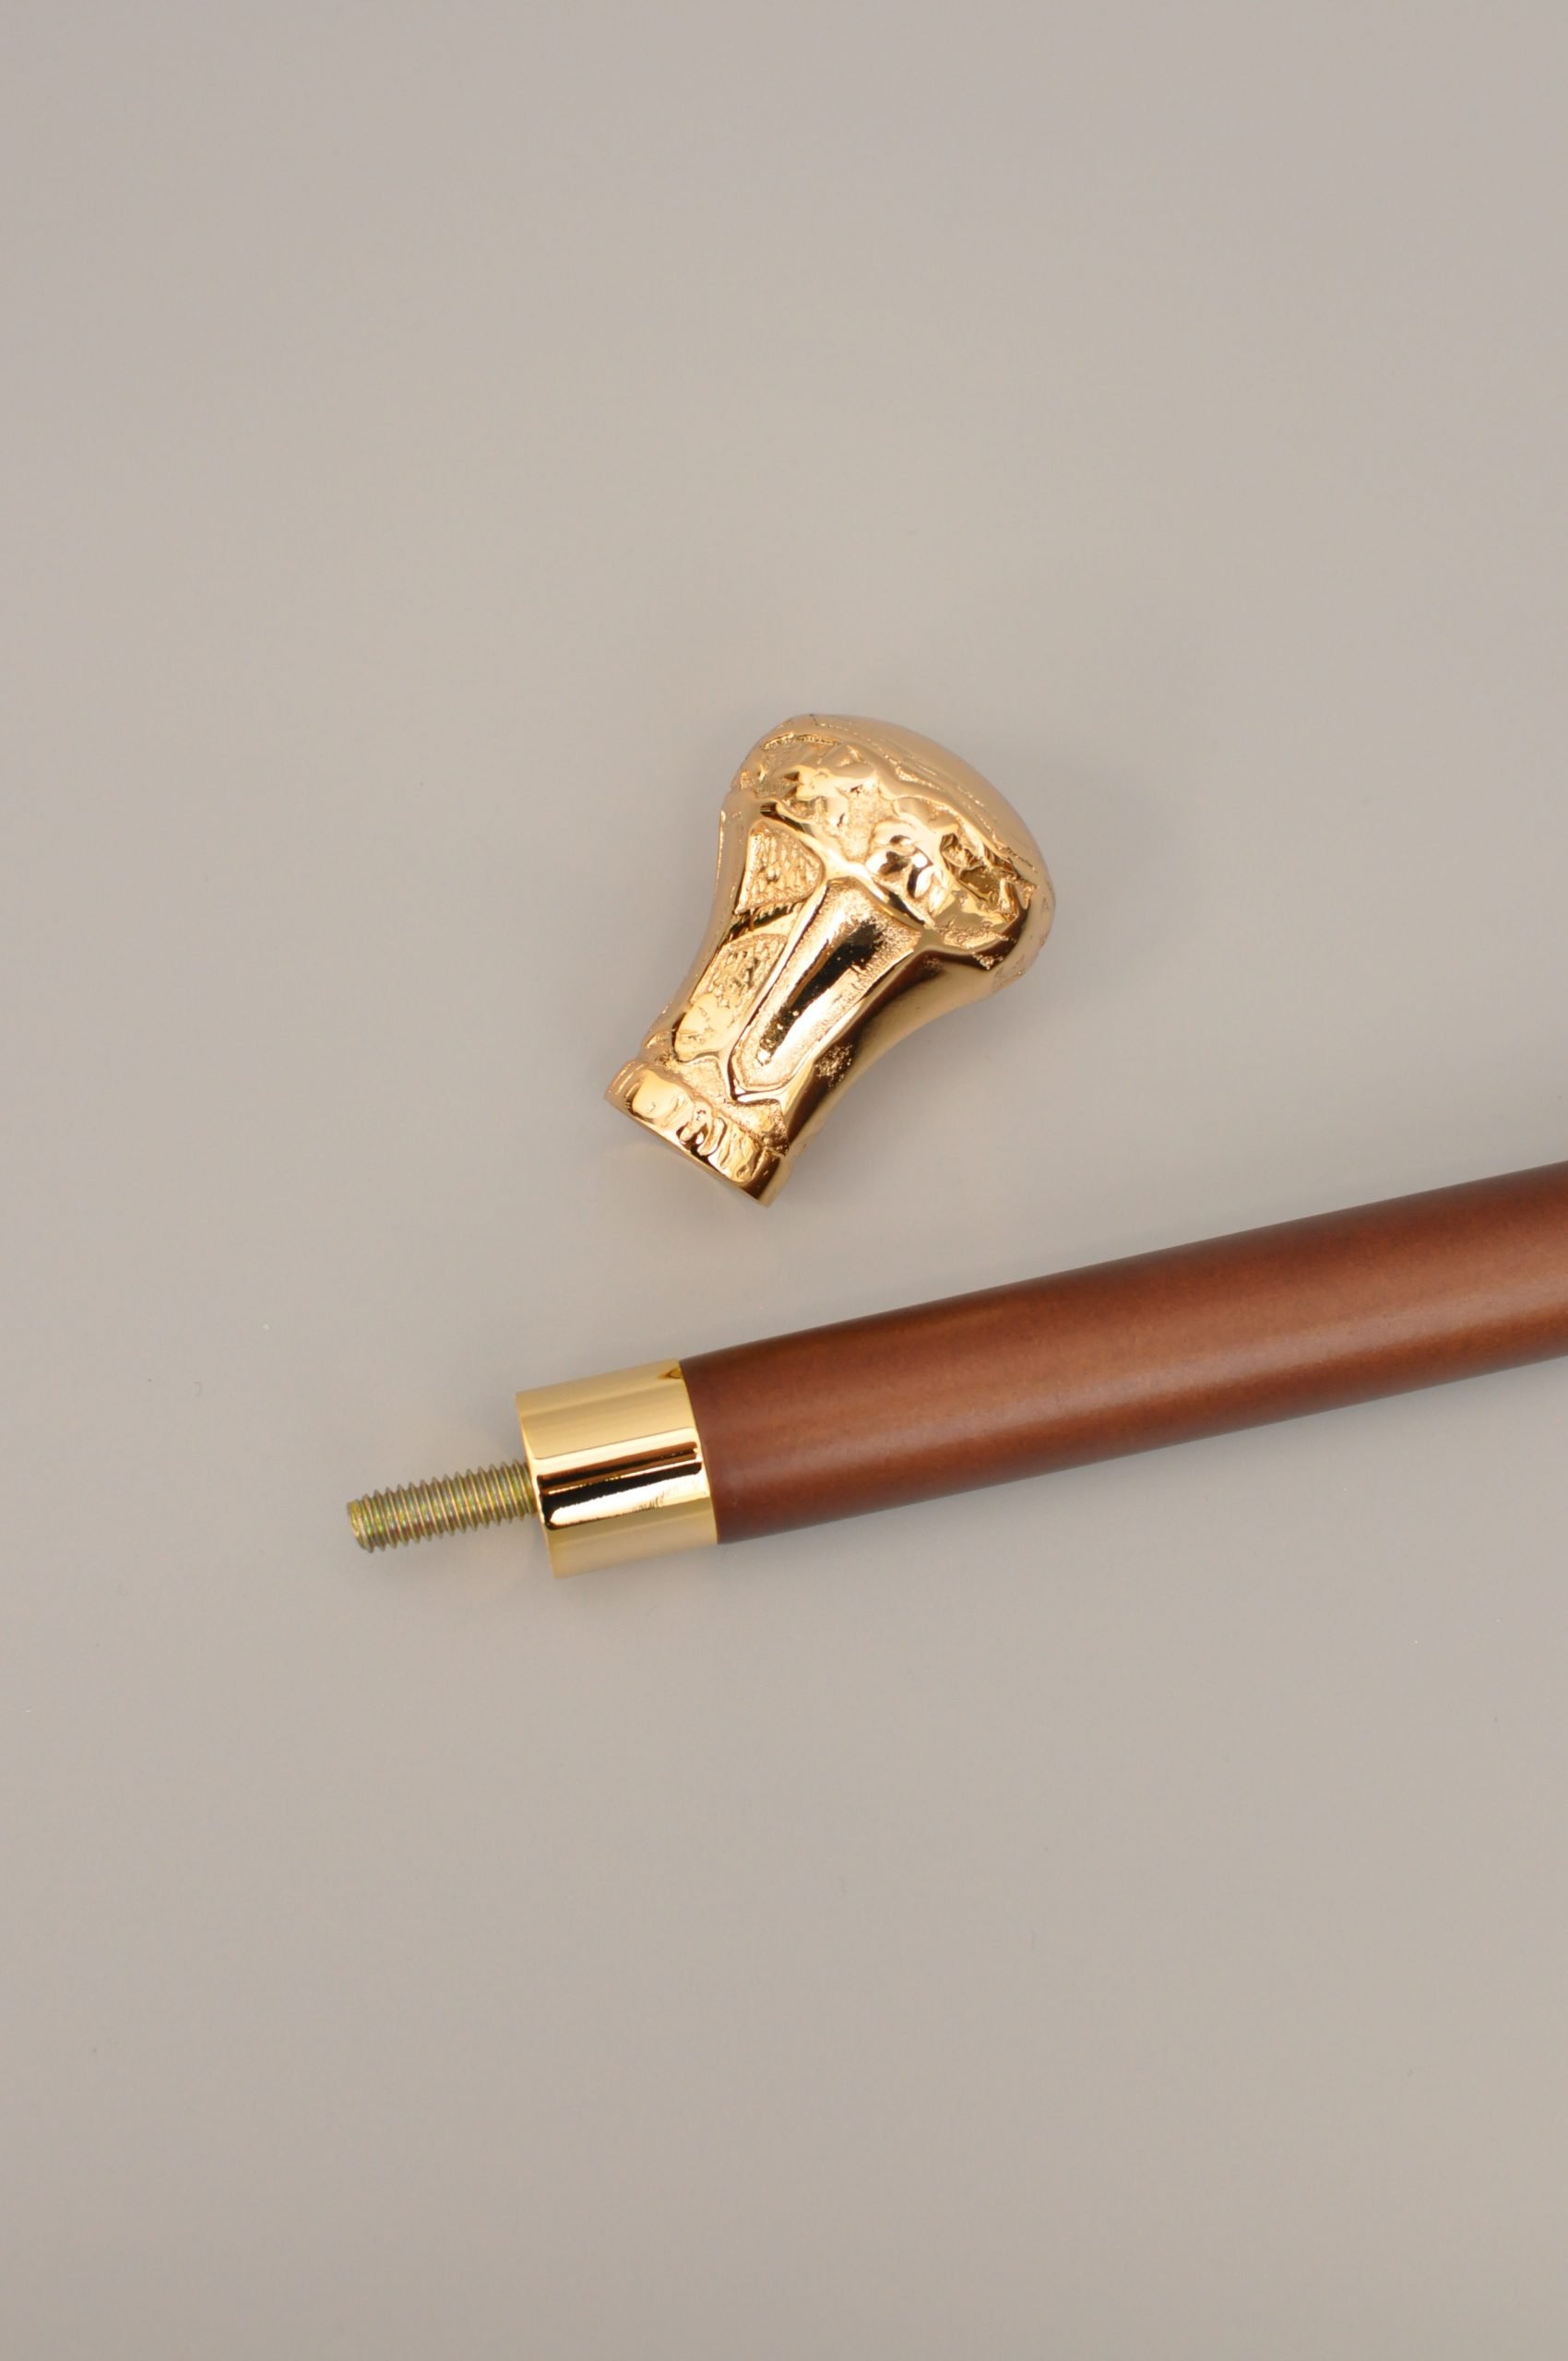 Crown Brass Handle Walking Stick » Walking Canes And Walking Sticks  Manufacturer And Supplier